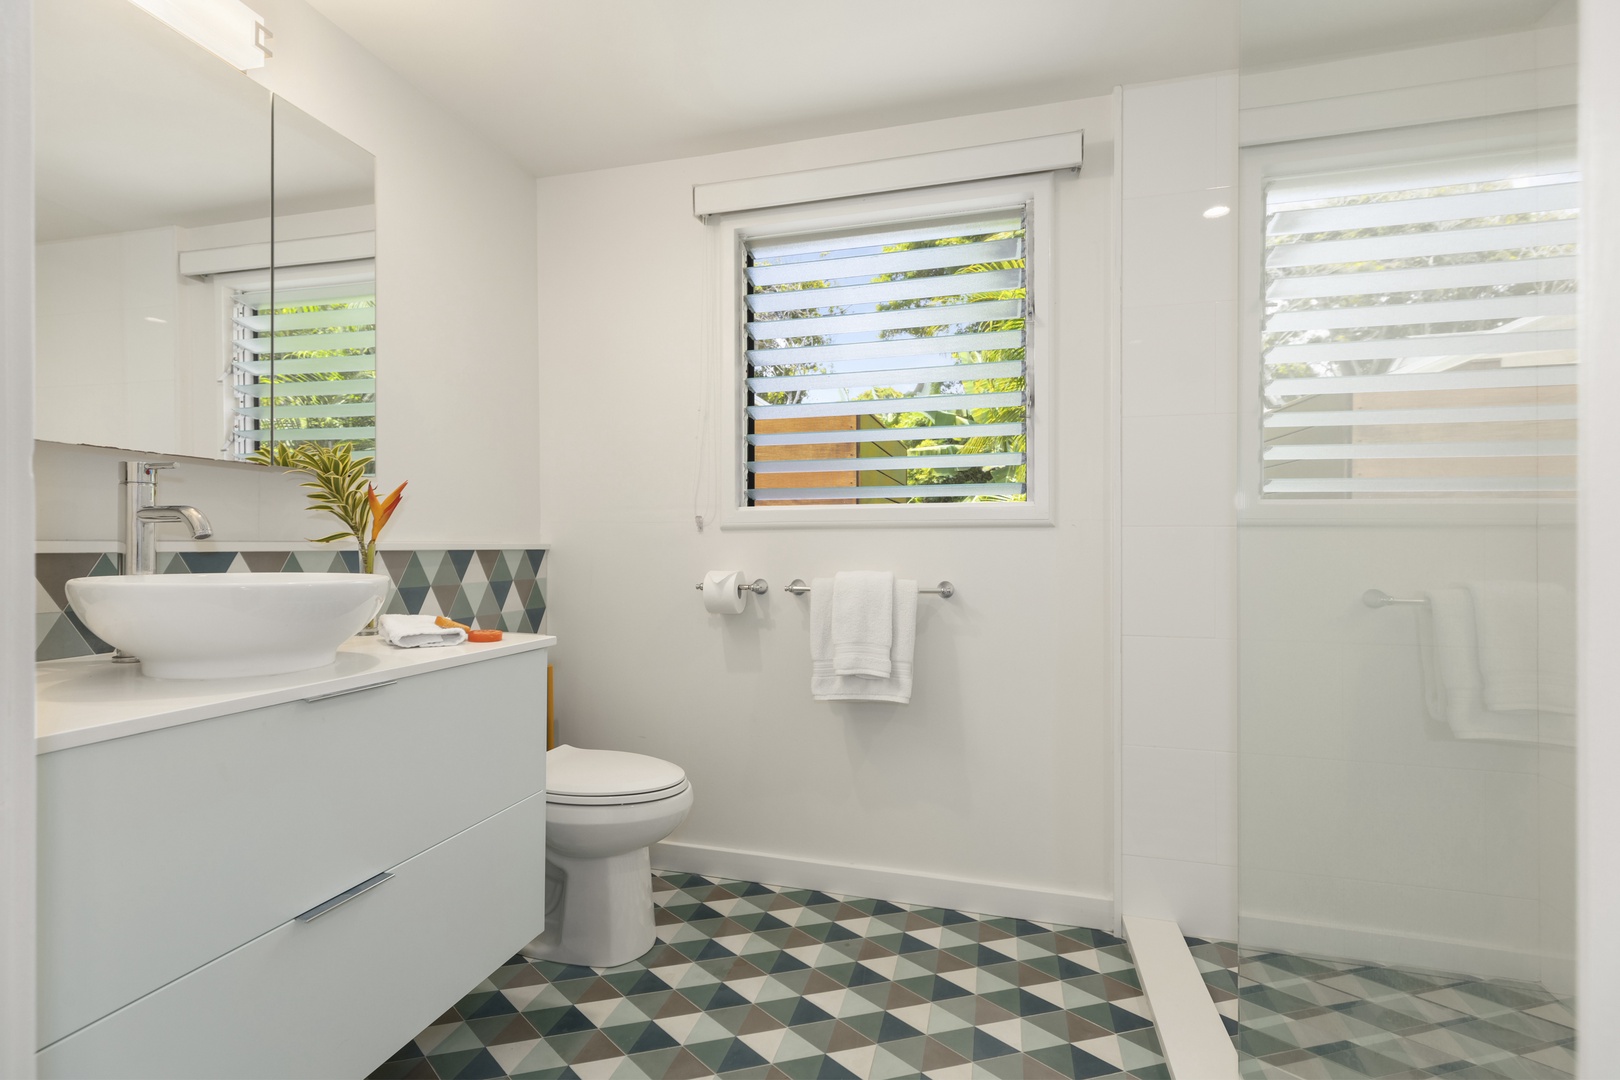 Kailua Vacation Rentals, Lanikai Hideaway - Private bath for guest bathroom